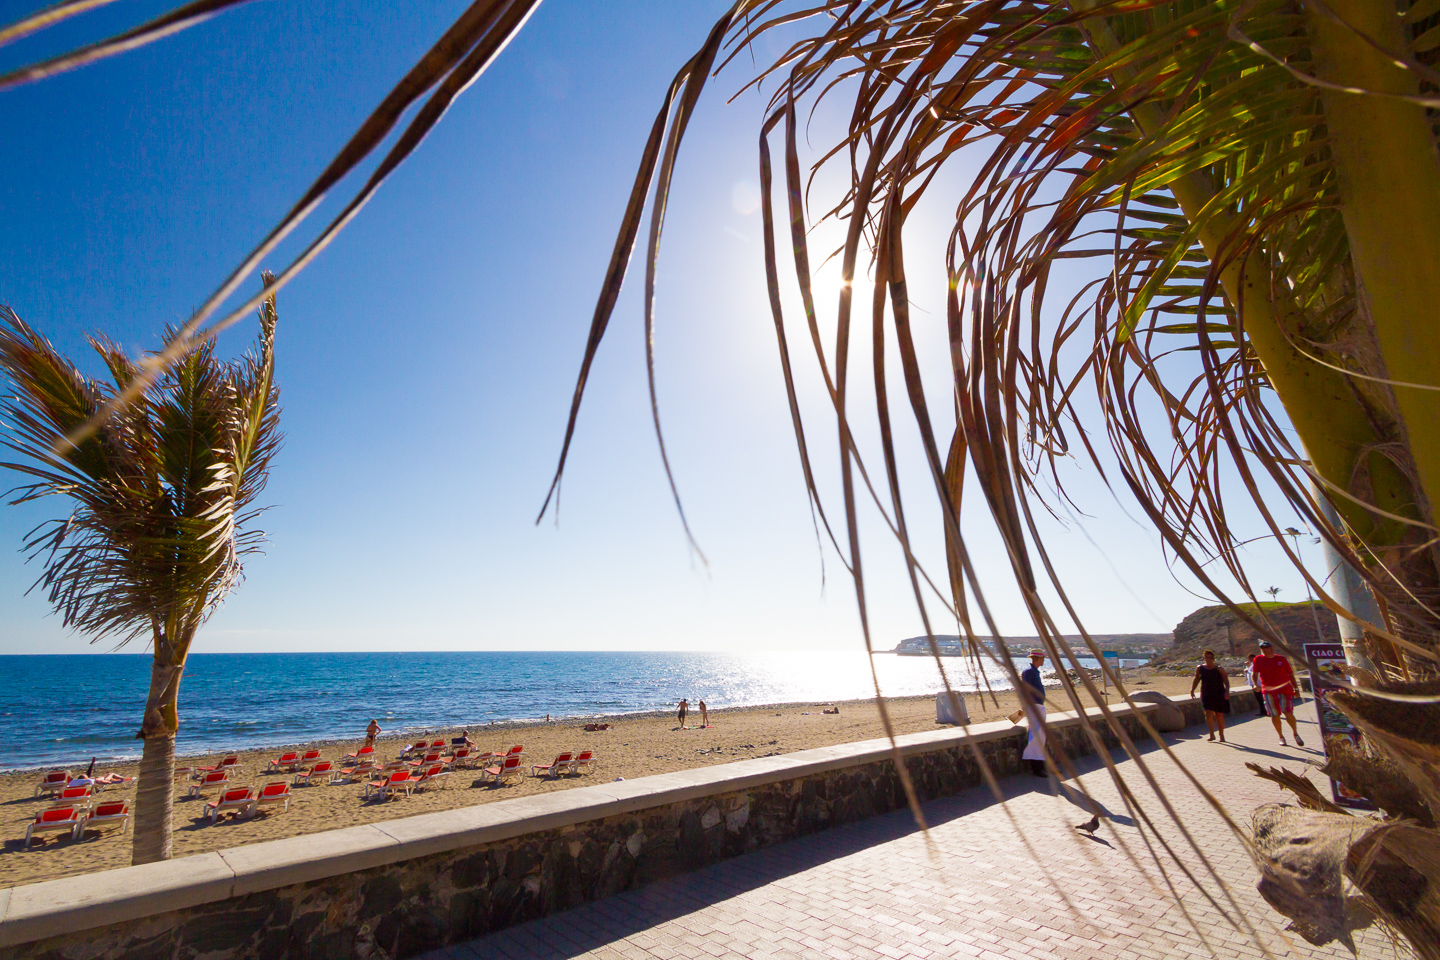 Gran Canaria Info - Meloneras: The Other Maspalomas Beach